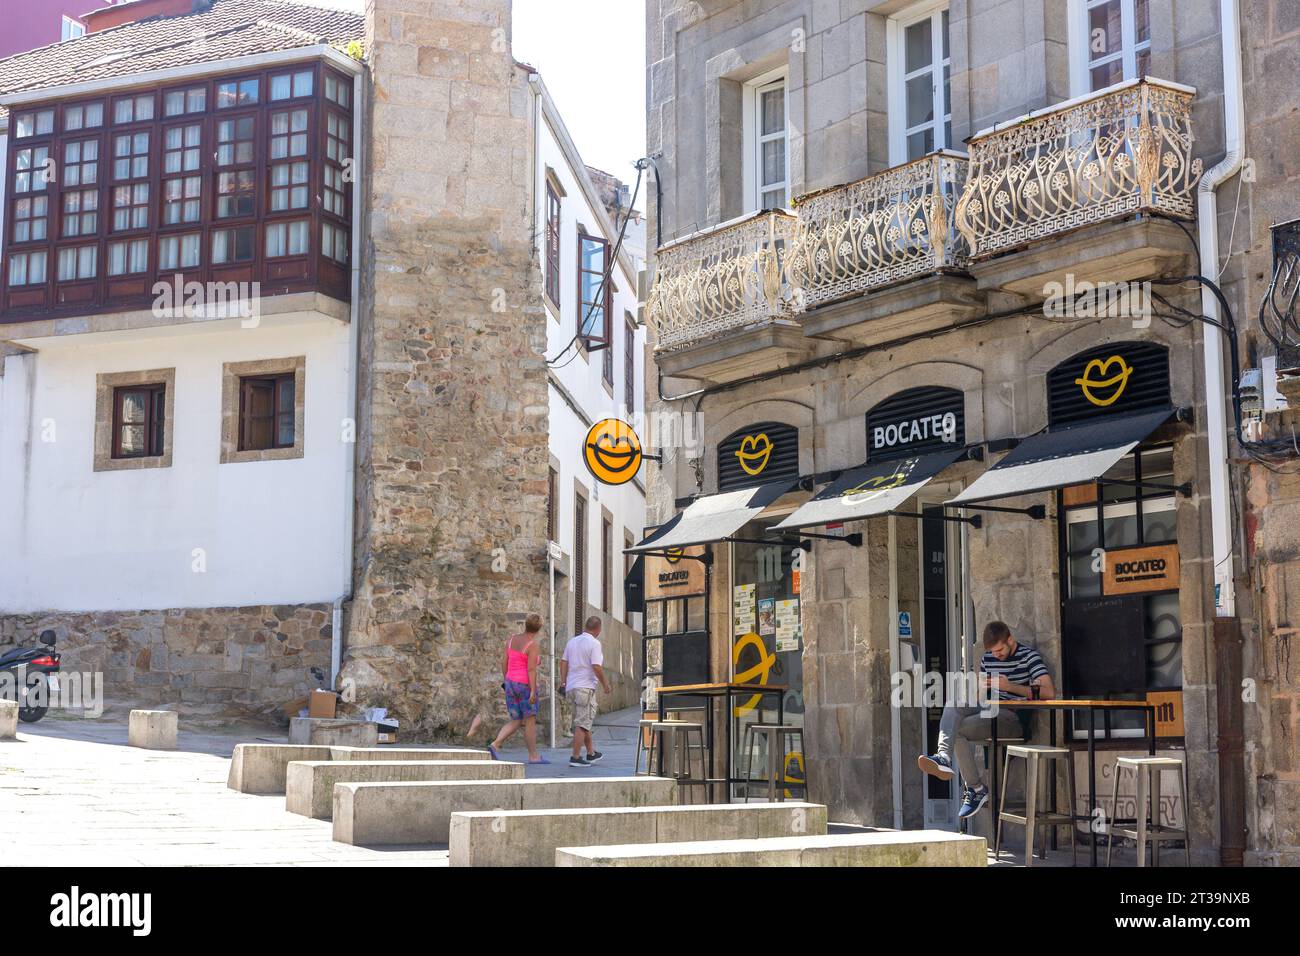 Bocateo restaurant, Rúa Méndez Núñez, Old Town, Vigo, Province of Pontevedra, Galicia, Kingdom of Spain Stock Photo